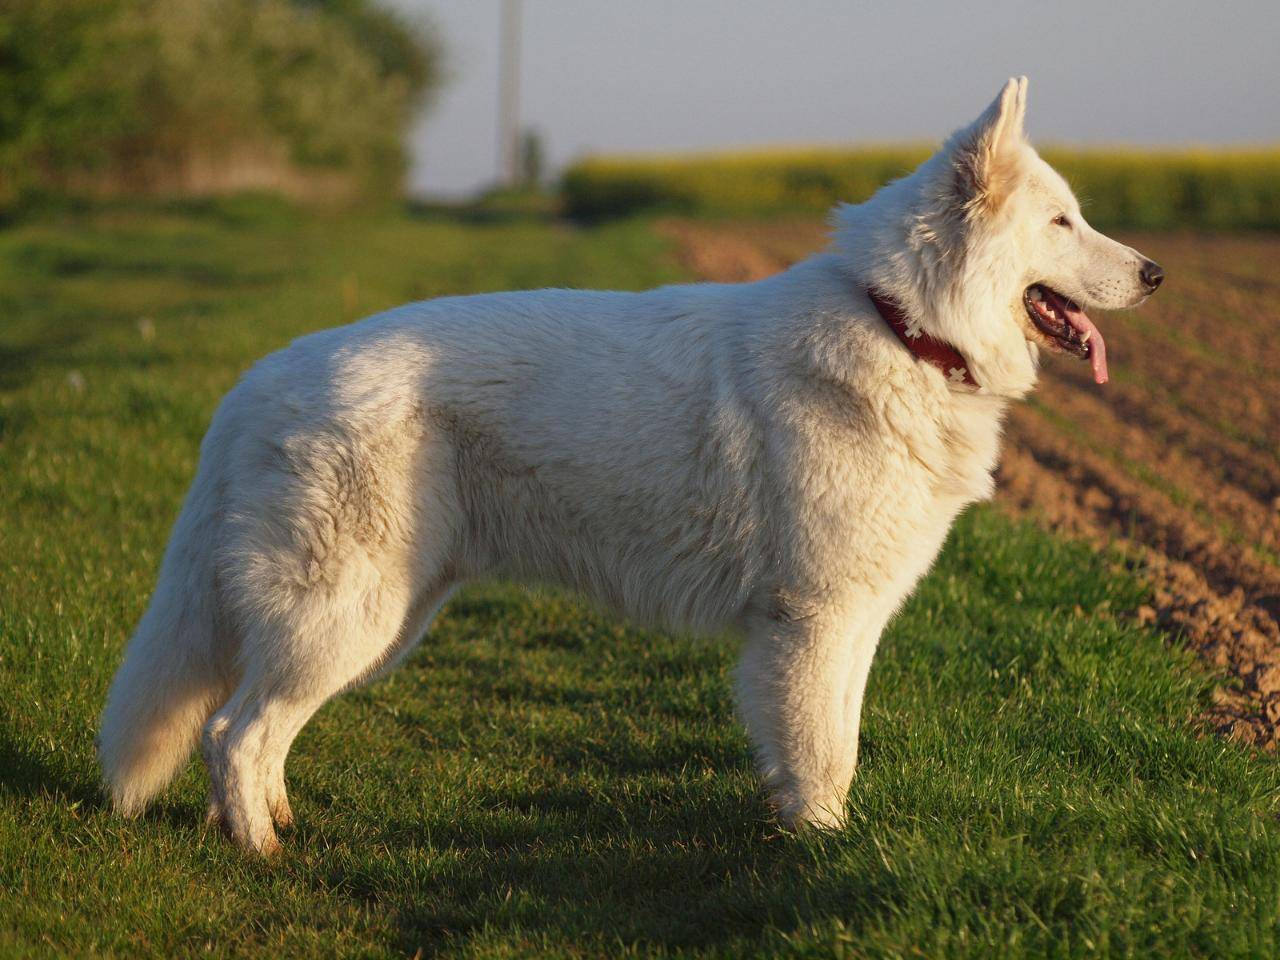 Белая швейцарская овчарка — характеристики породы, стандарт внешности, уход